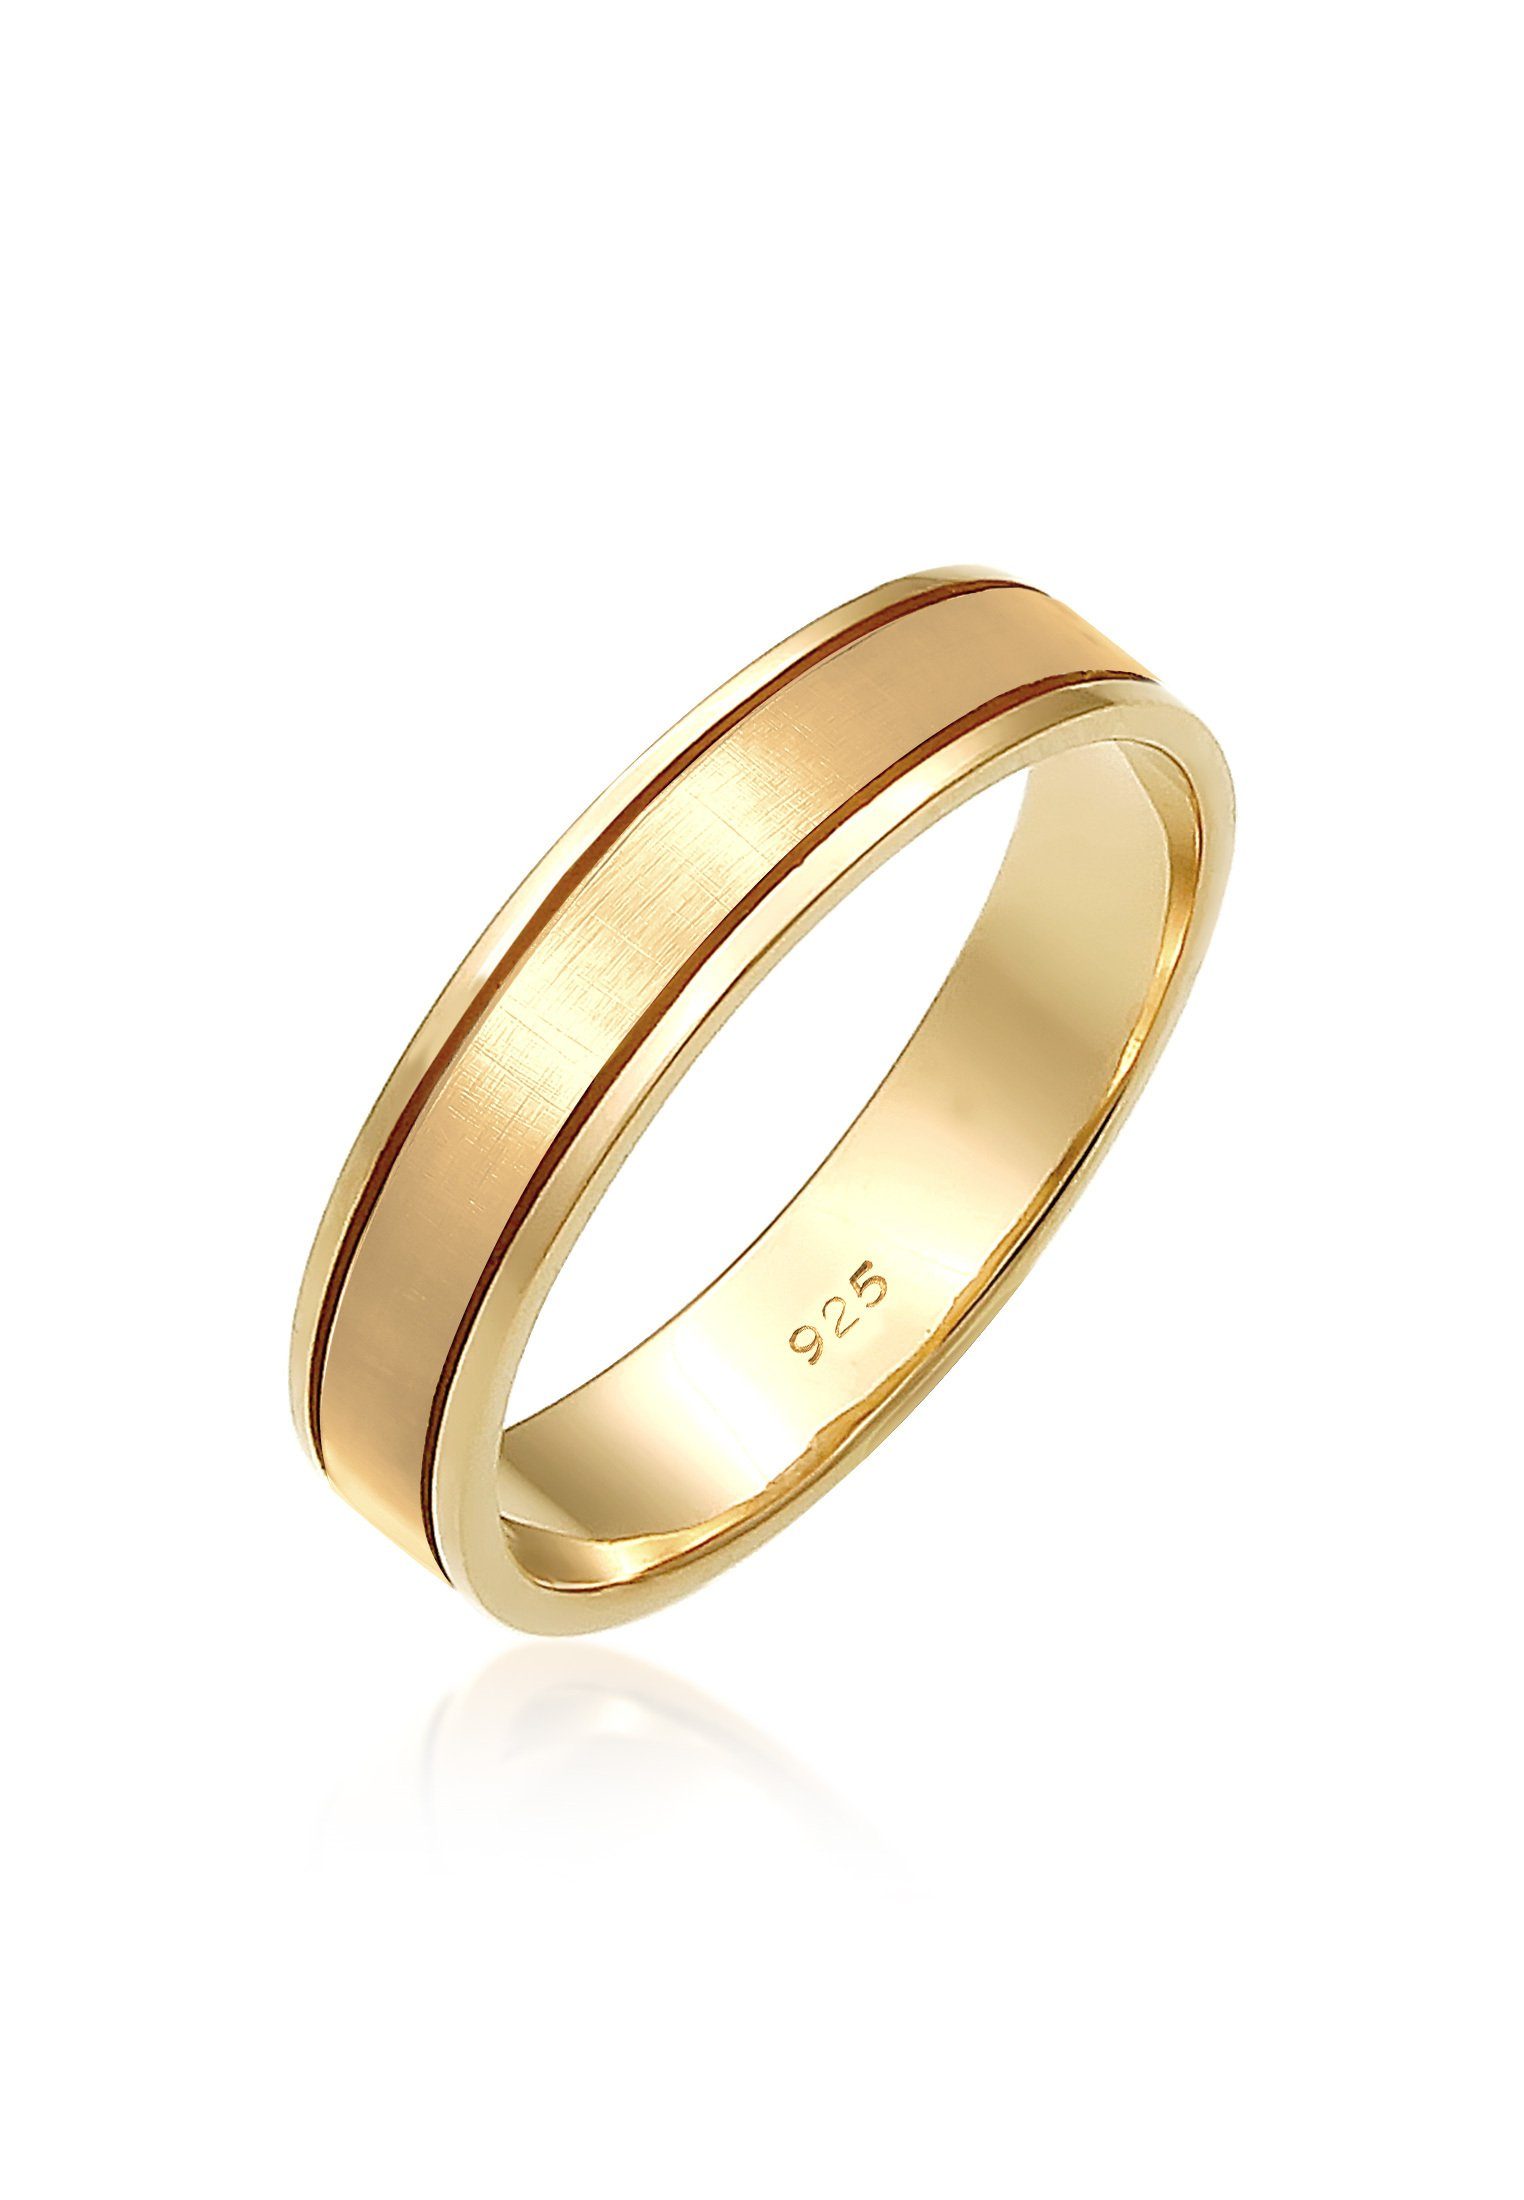 Elli Premium Partnerring Paarring Bandring Trauring Hochzeit Ehe 925 Silber Gold